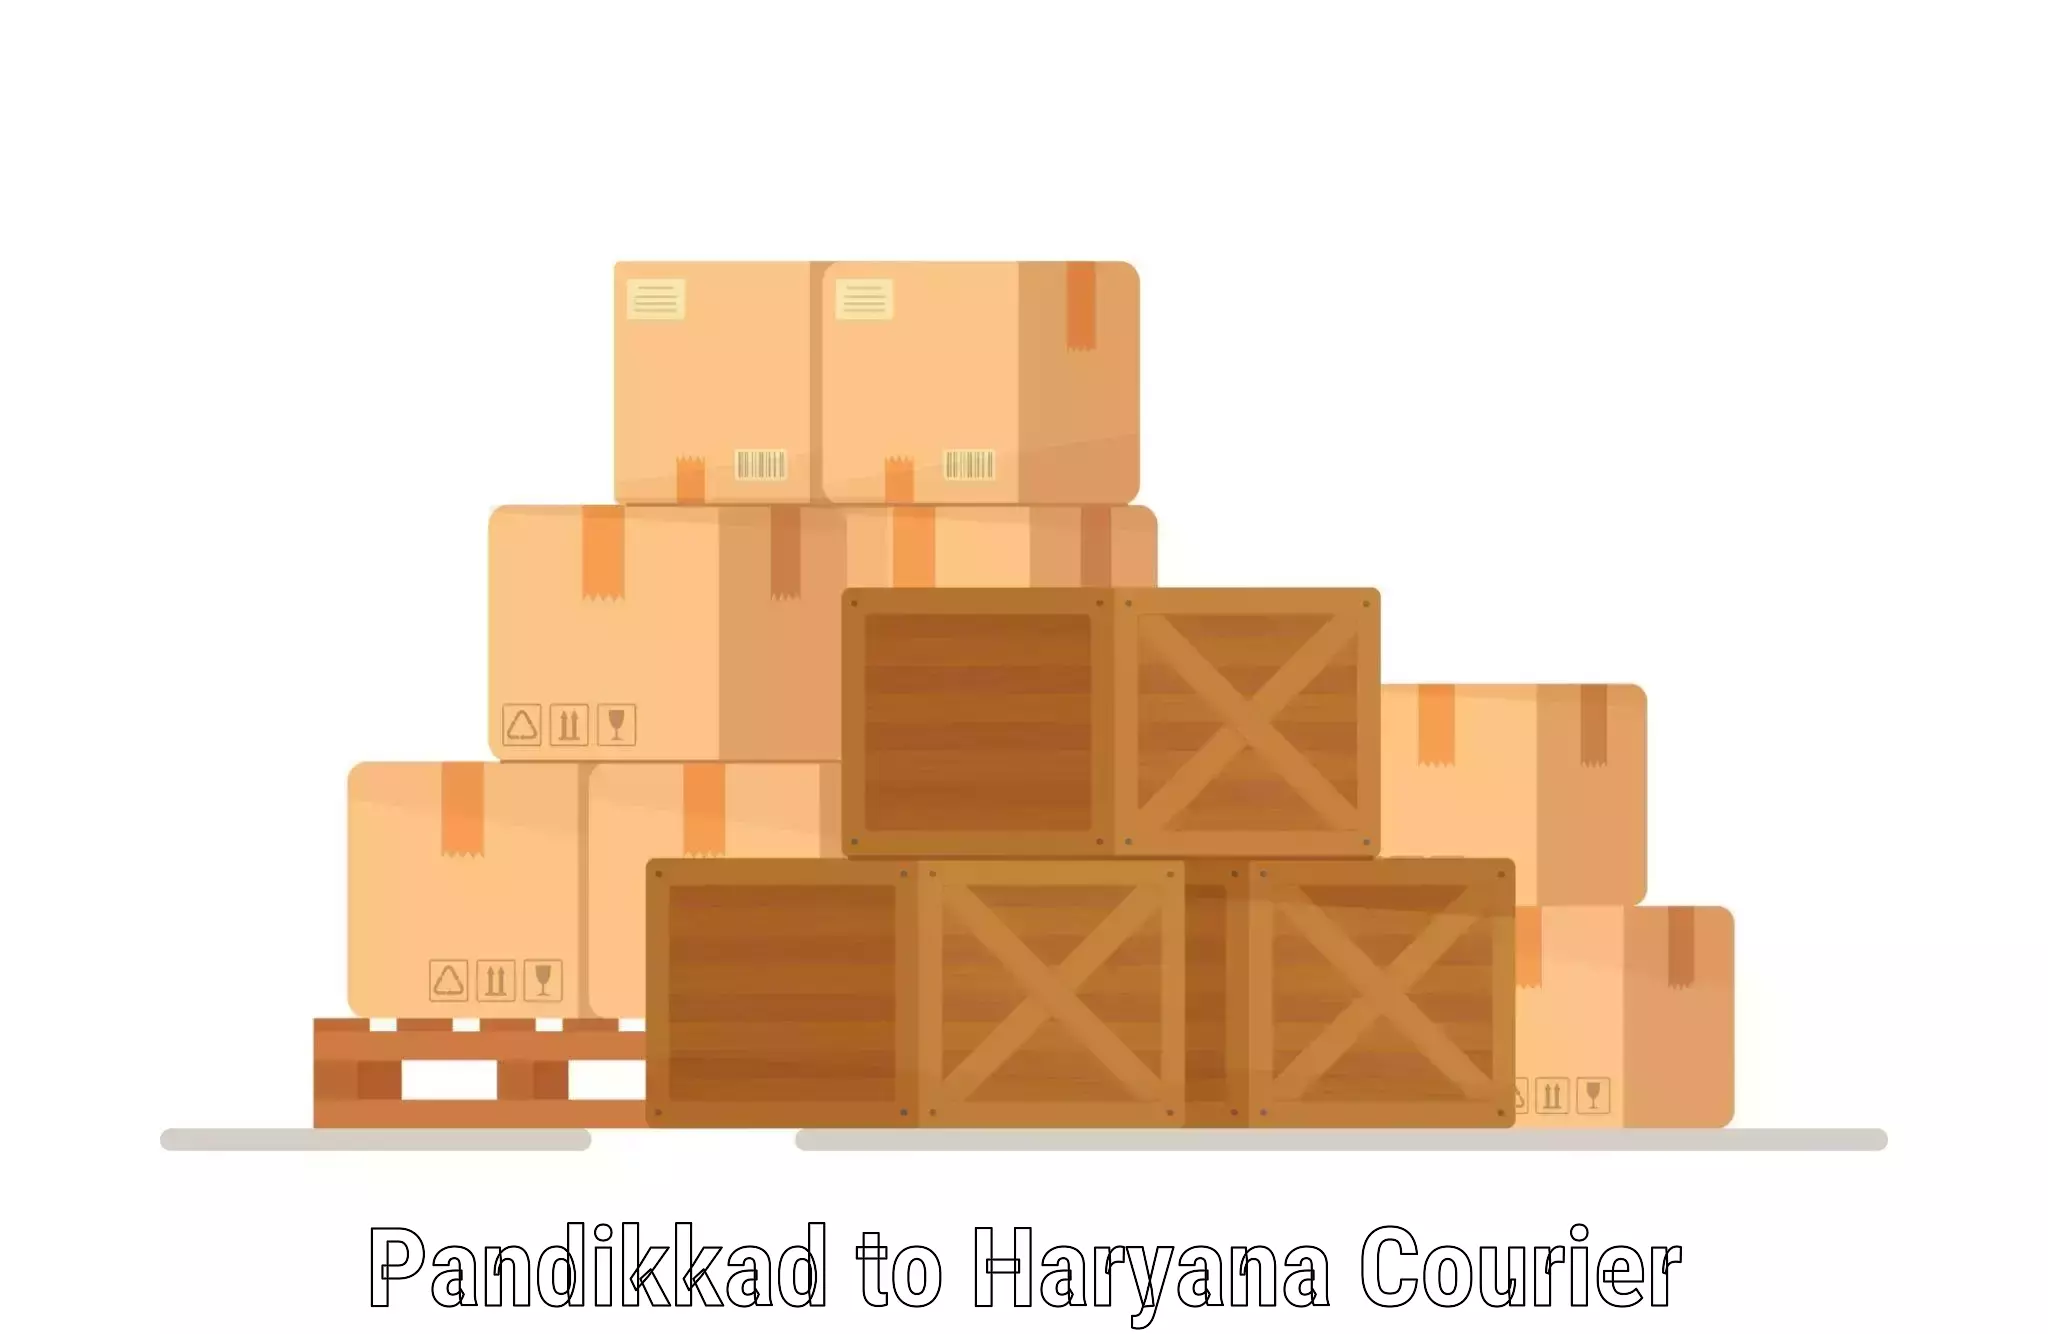 Sustainable shipping practices Pandikkad to Panchkula